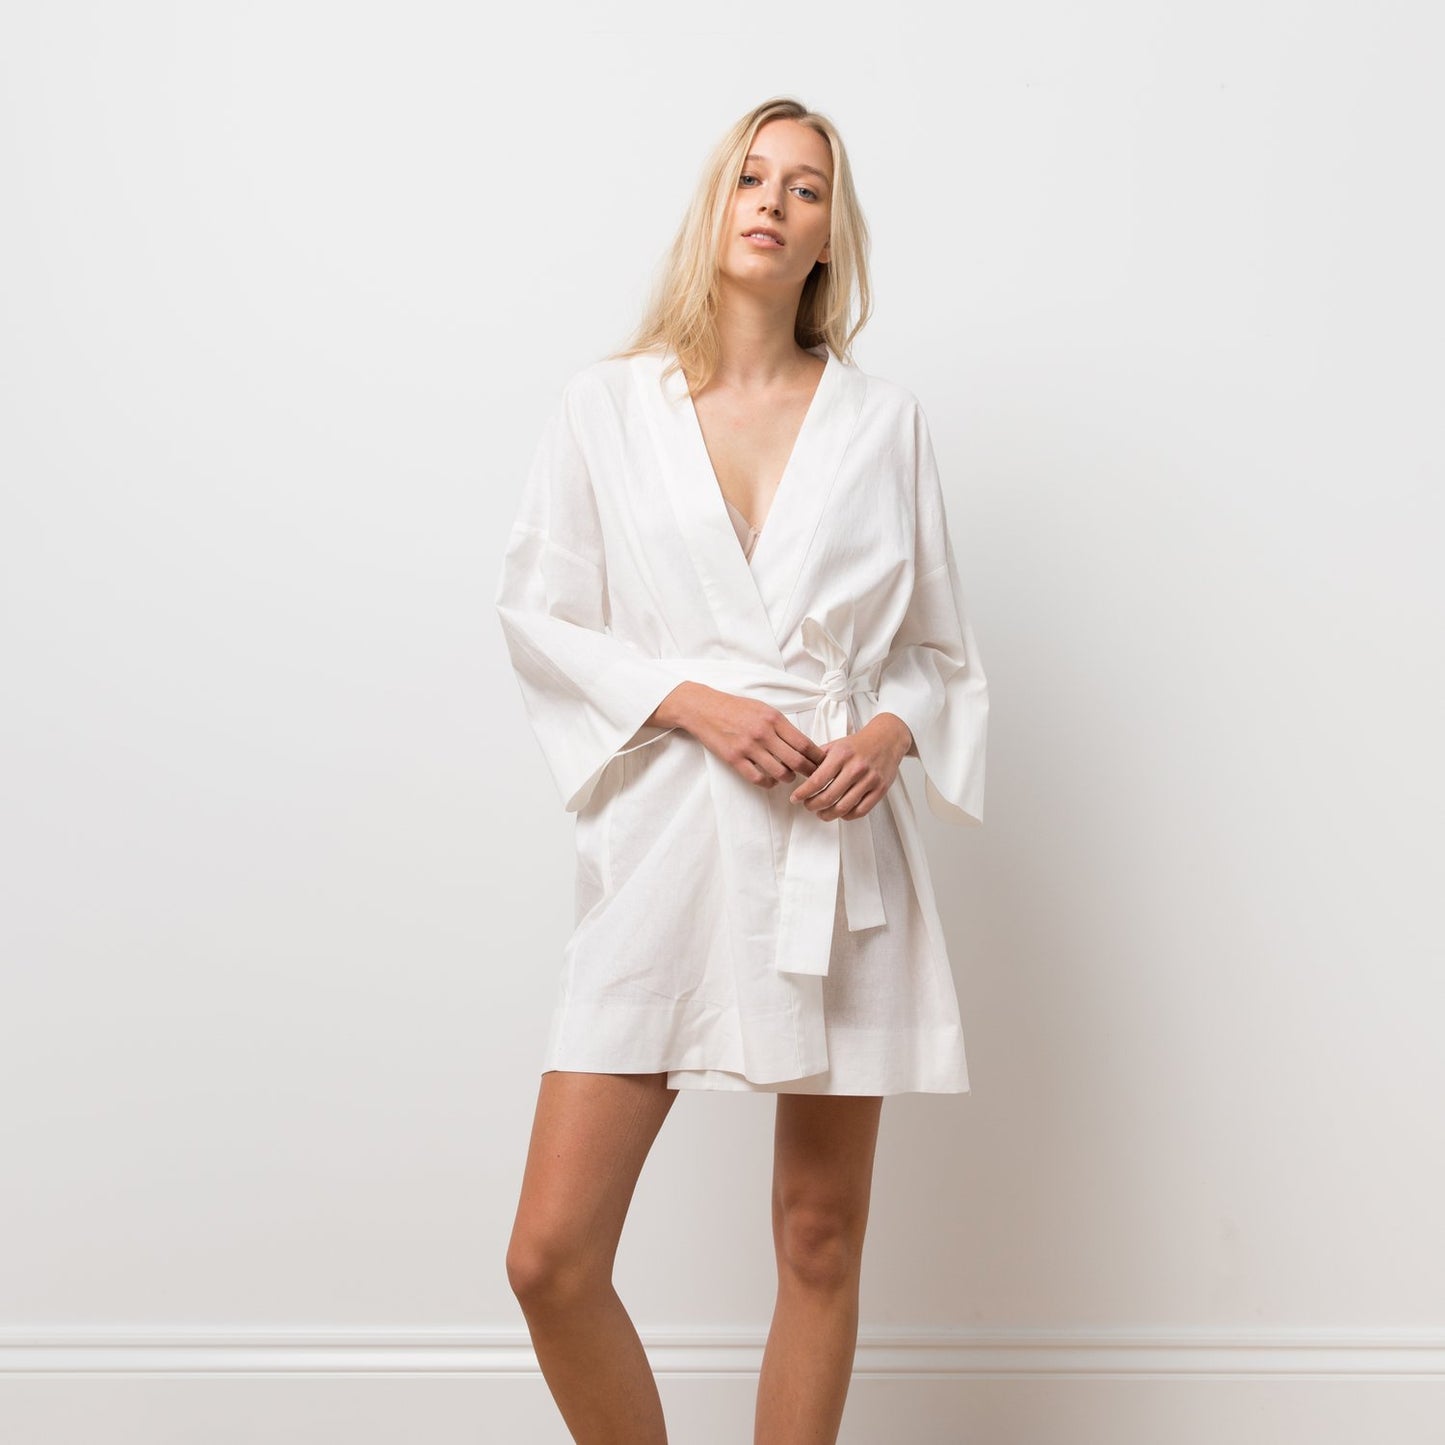 Woman wearing white robe